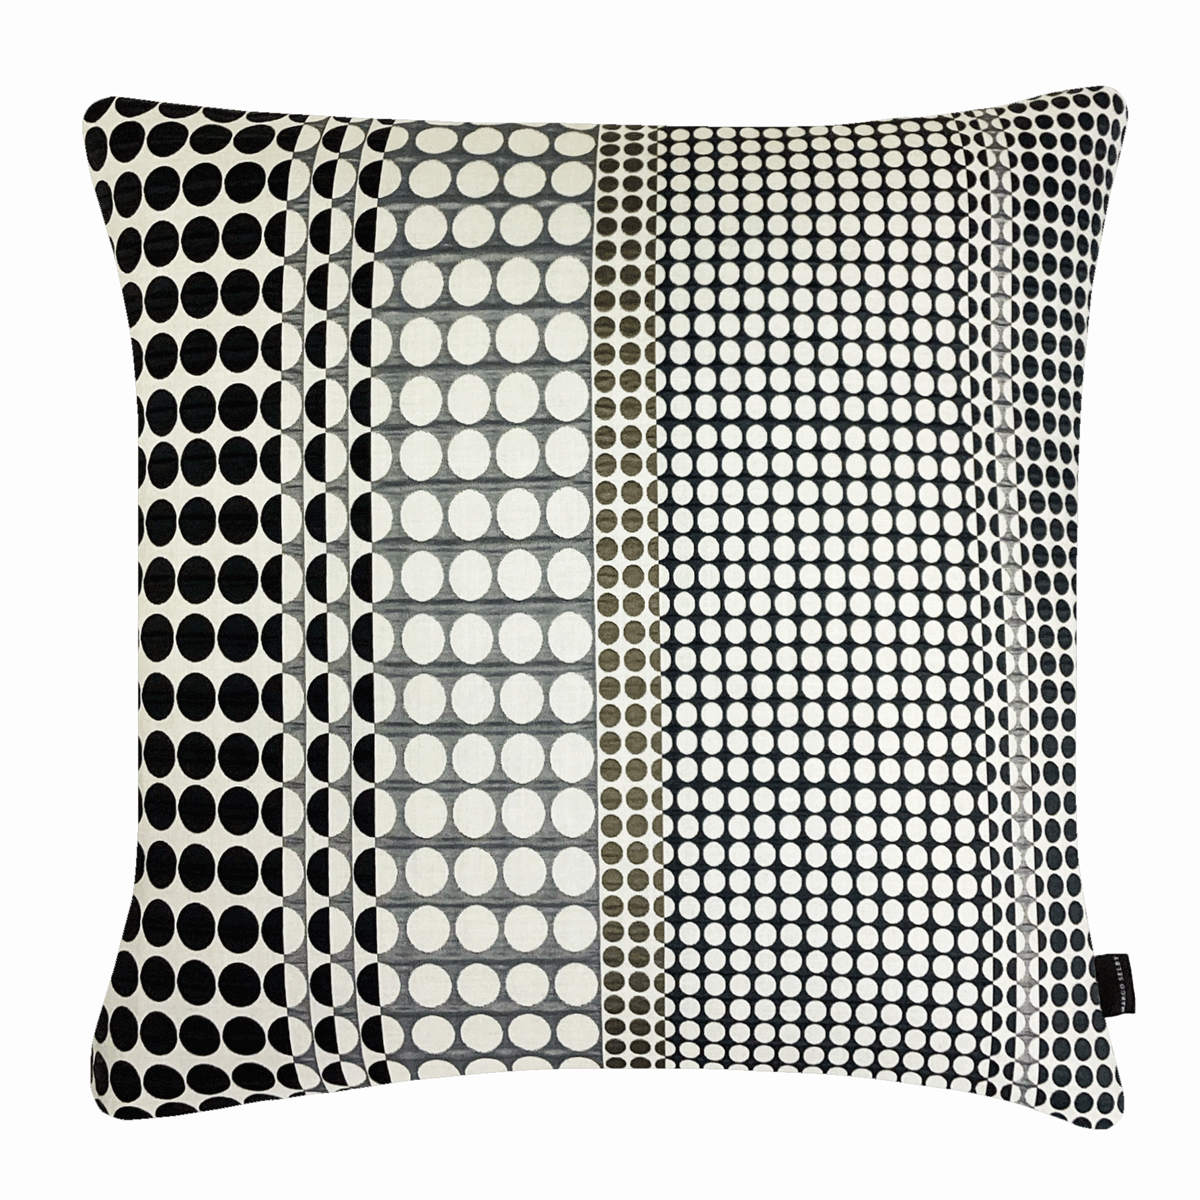 Designer cushion, Decorative cushion, Geometric cushion, Colourful cushion, Luxury cushion, Seat cushion,  couch cushion covers, Cushion cover, neutral cushion, black cushion, white cushion